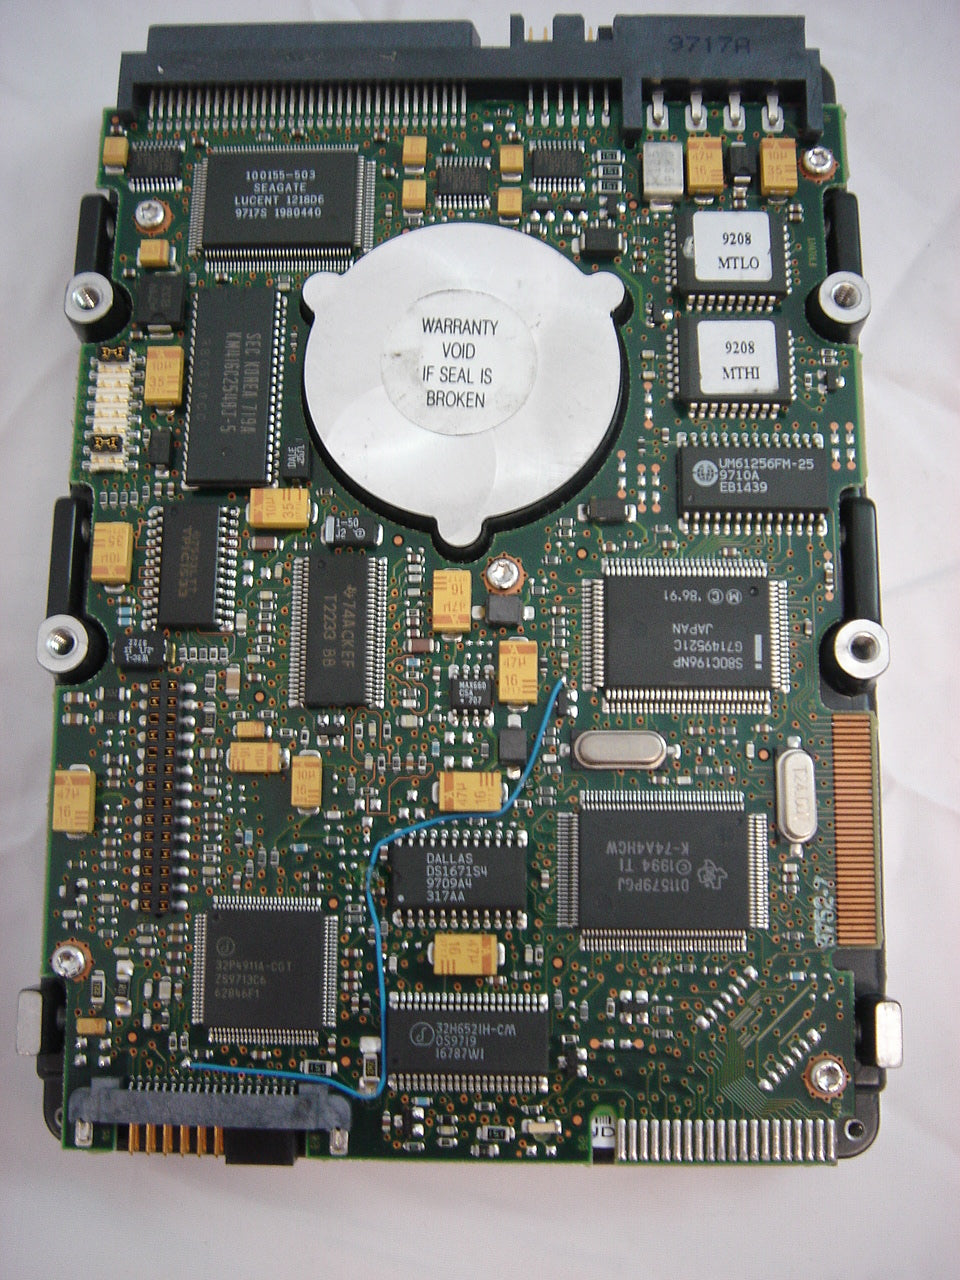 9C6006-026 - Seagate 4.3Gb SCSI 68pin 3.5in HDD - Refurbished